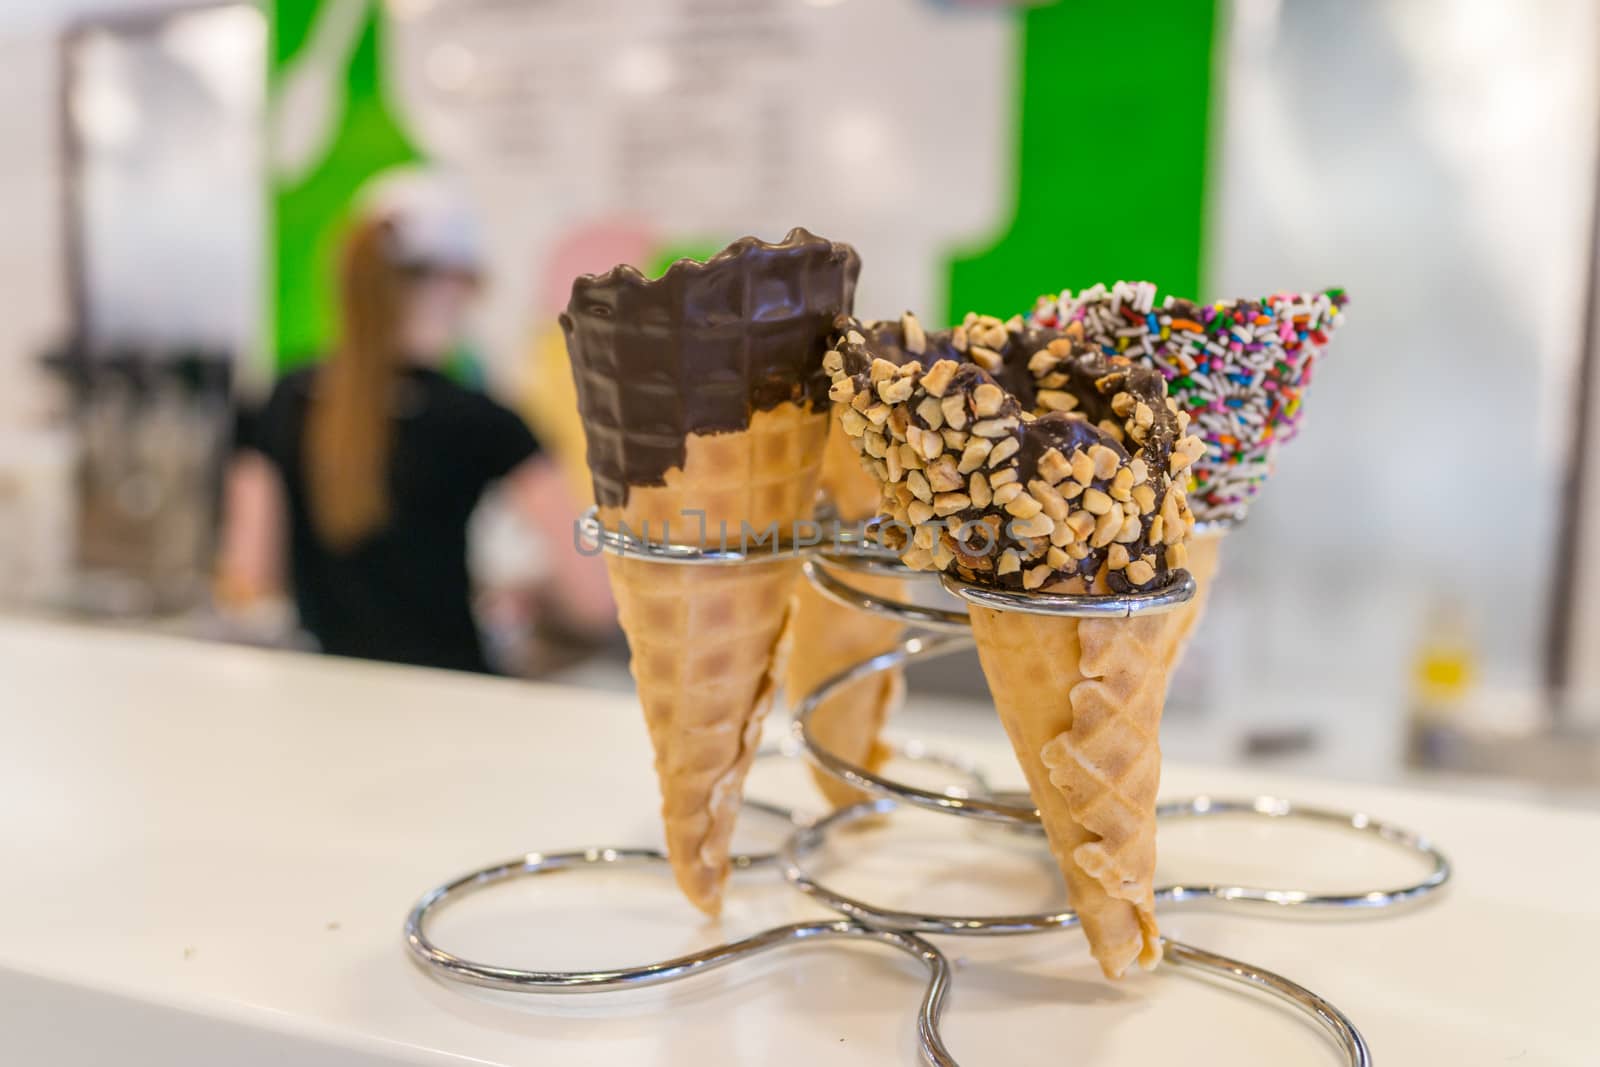 Ice cream cones in store by IVYPHOTOS